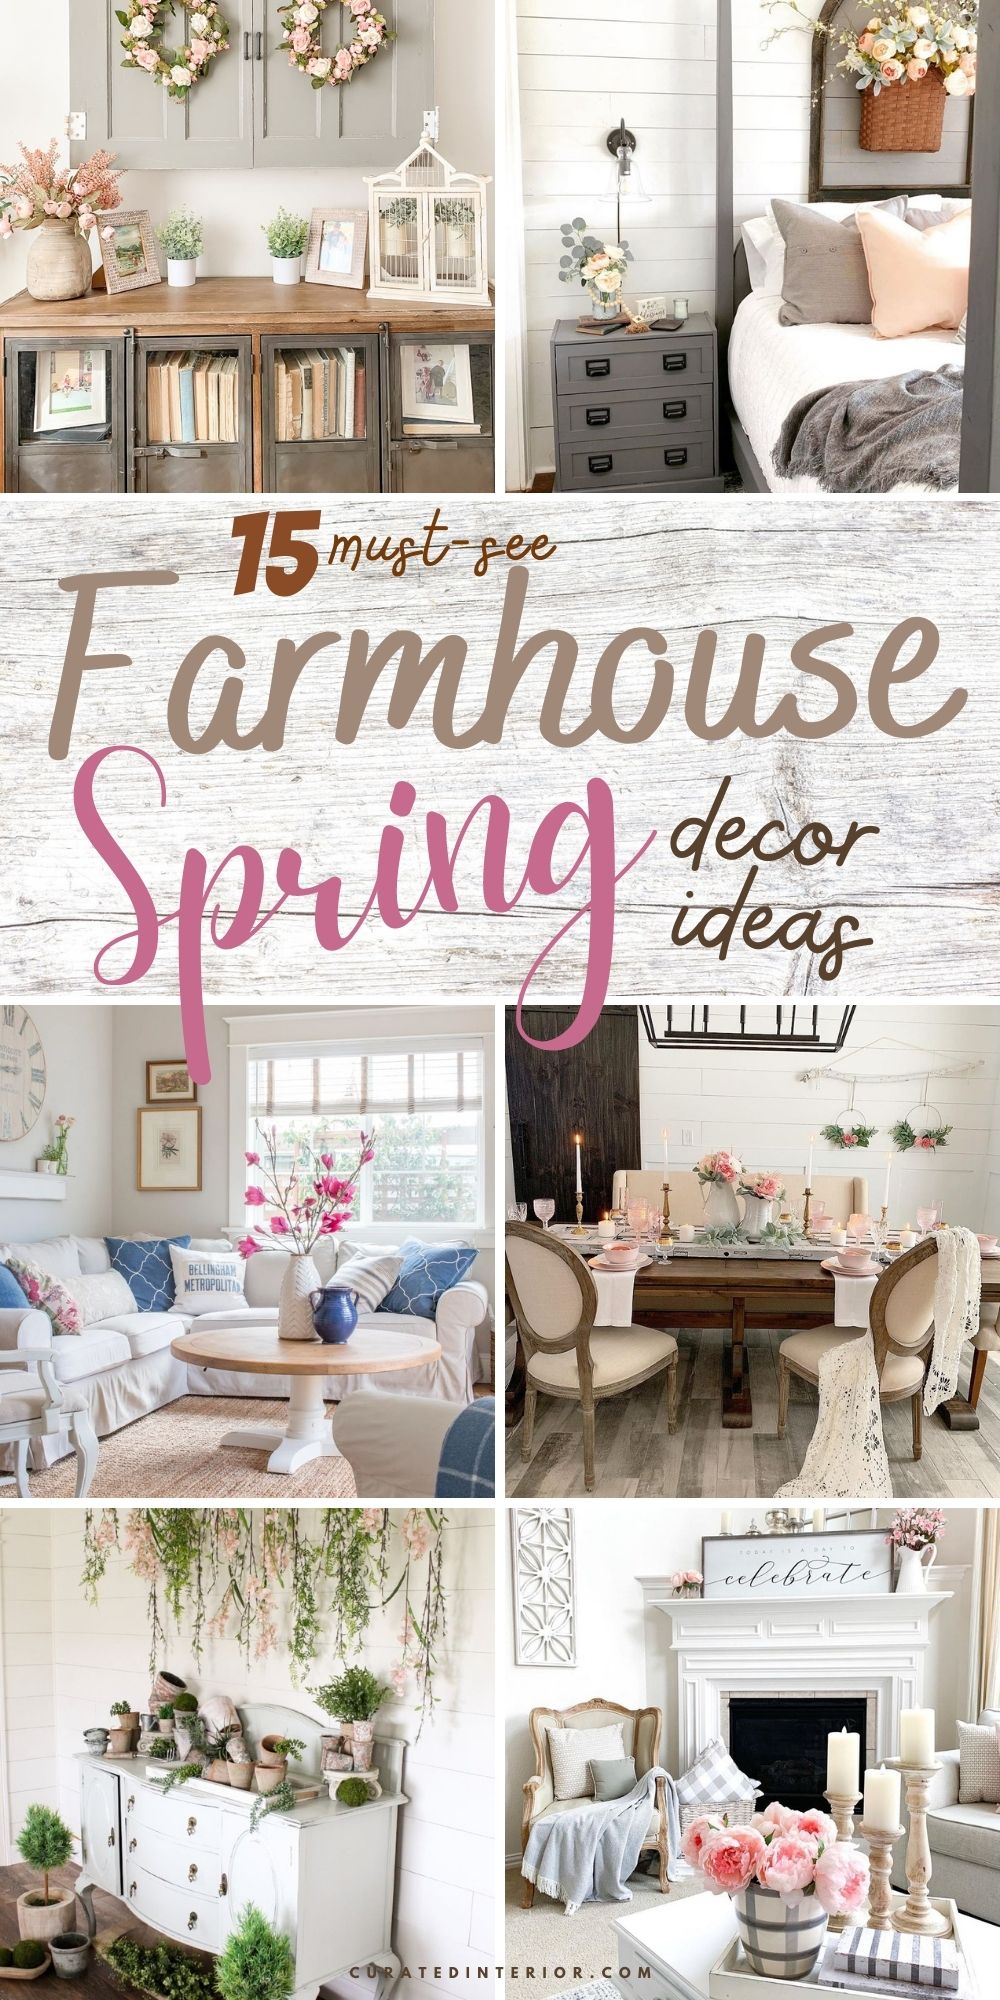 15 Must-See Farmhouse Spring Home Decor Ideas